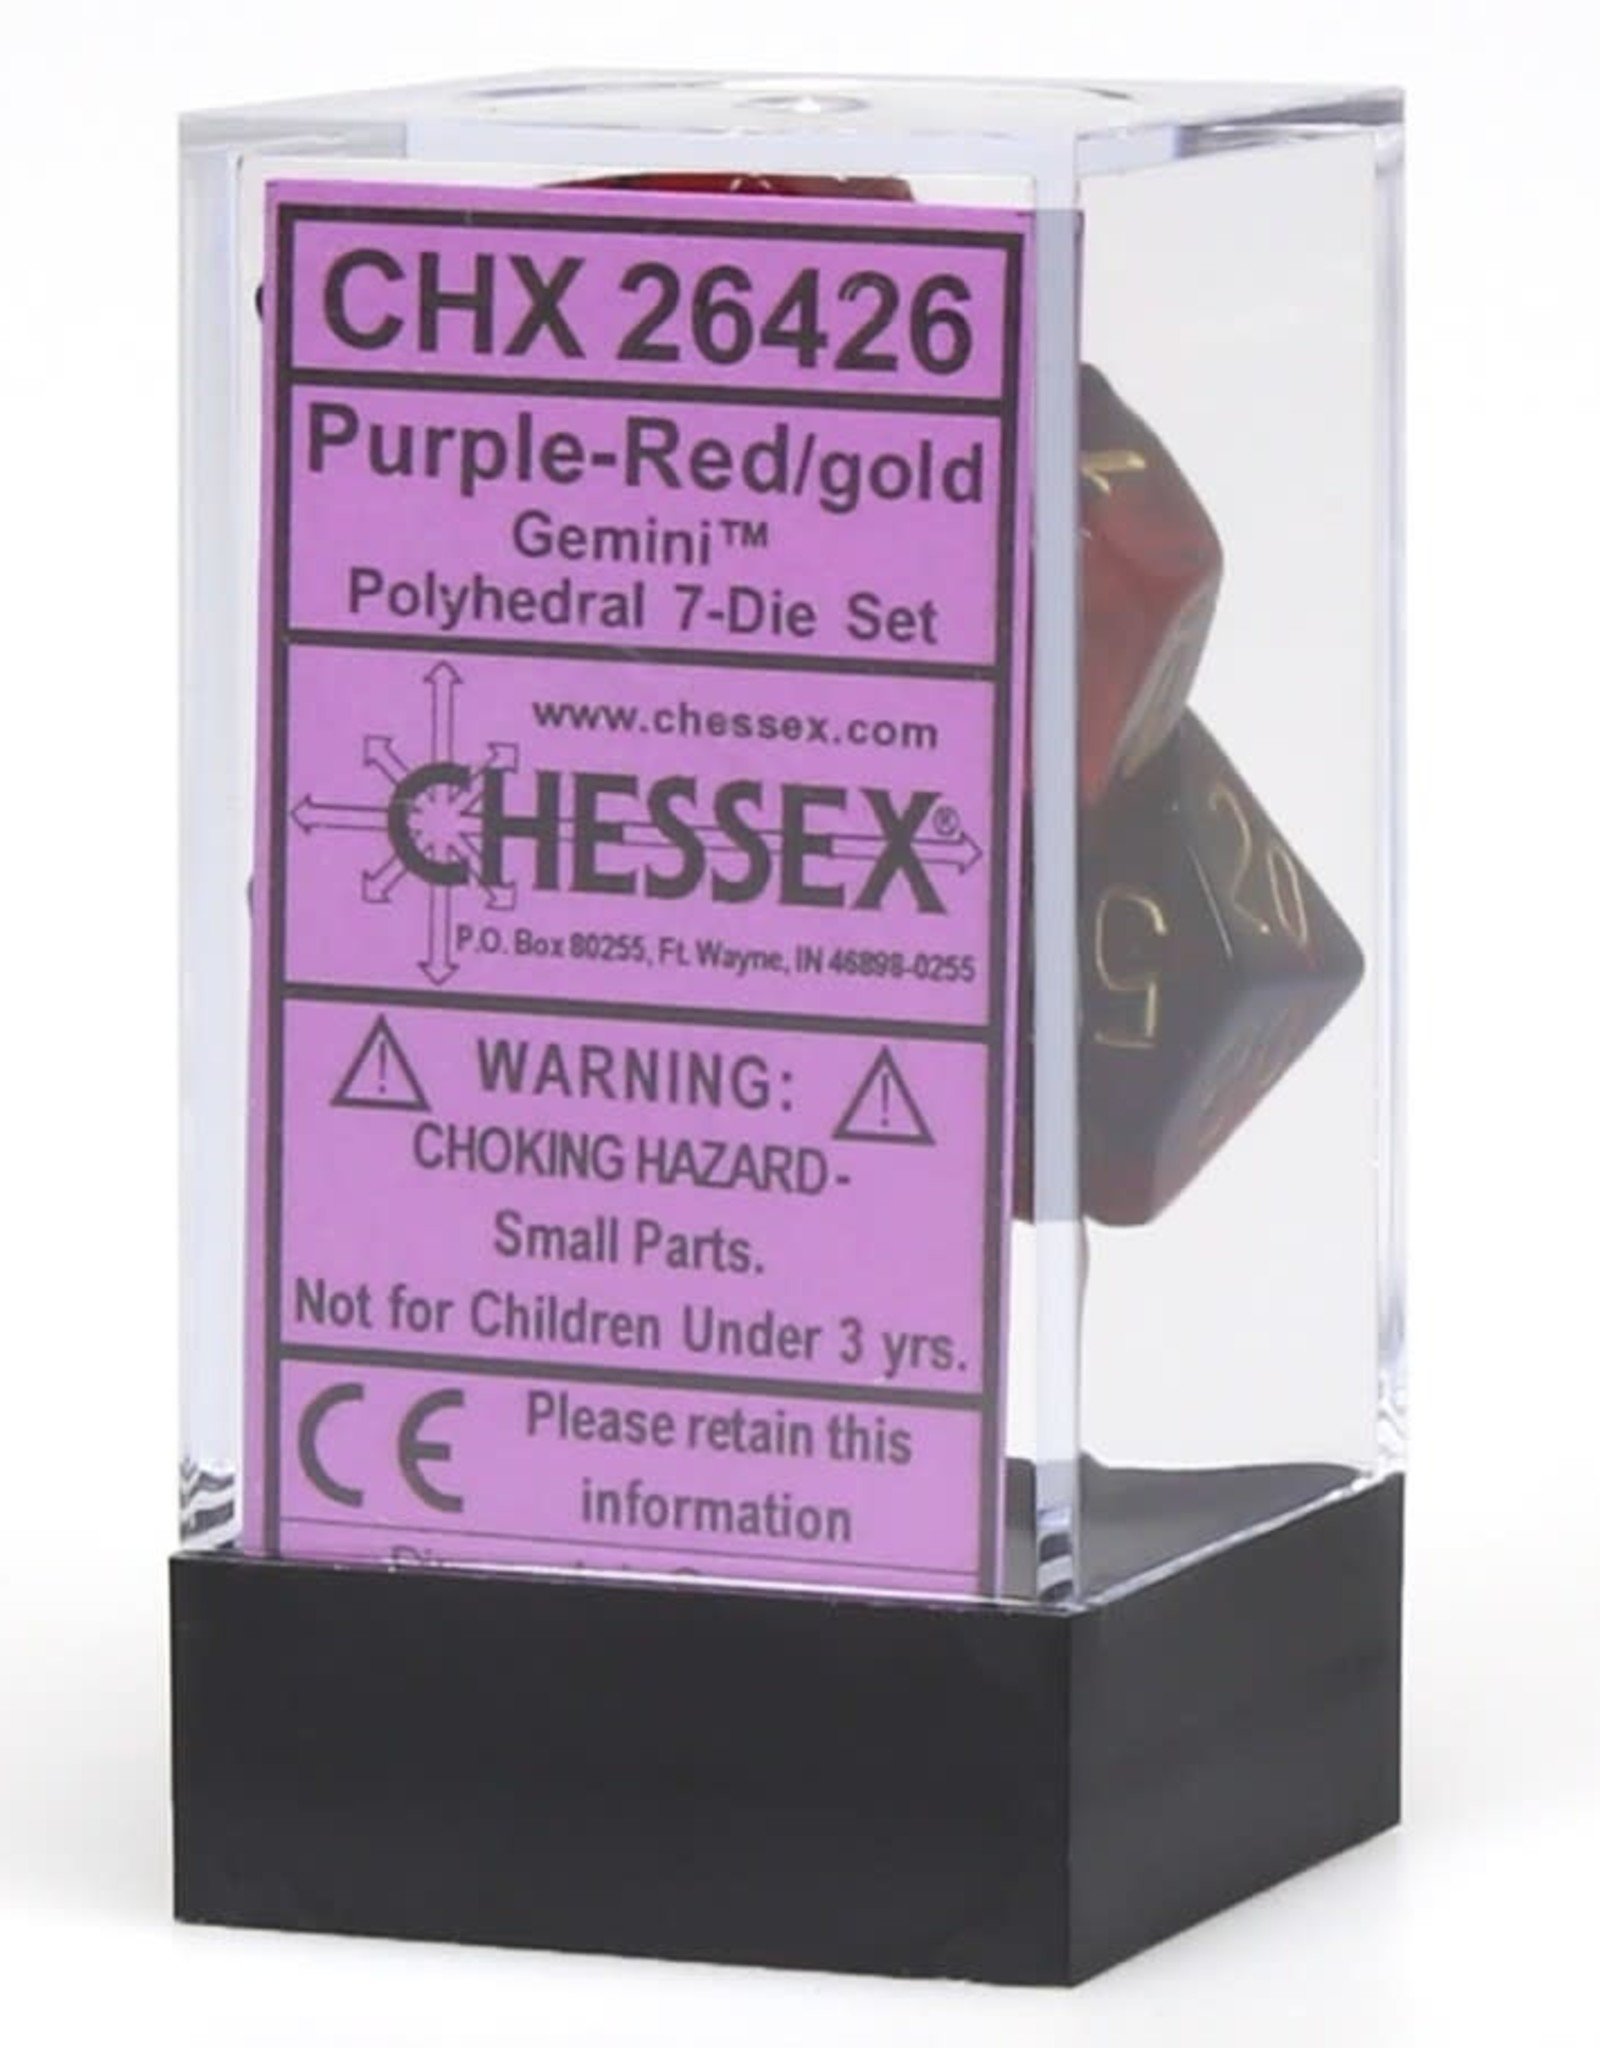 Chessex CHX Gemini Dice: Purple-Red/Gold Poly 7-Die Set 26426